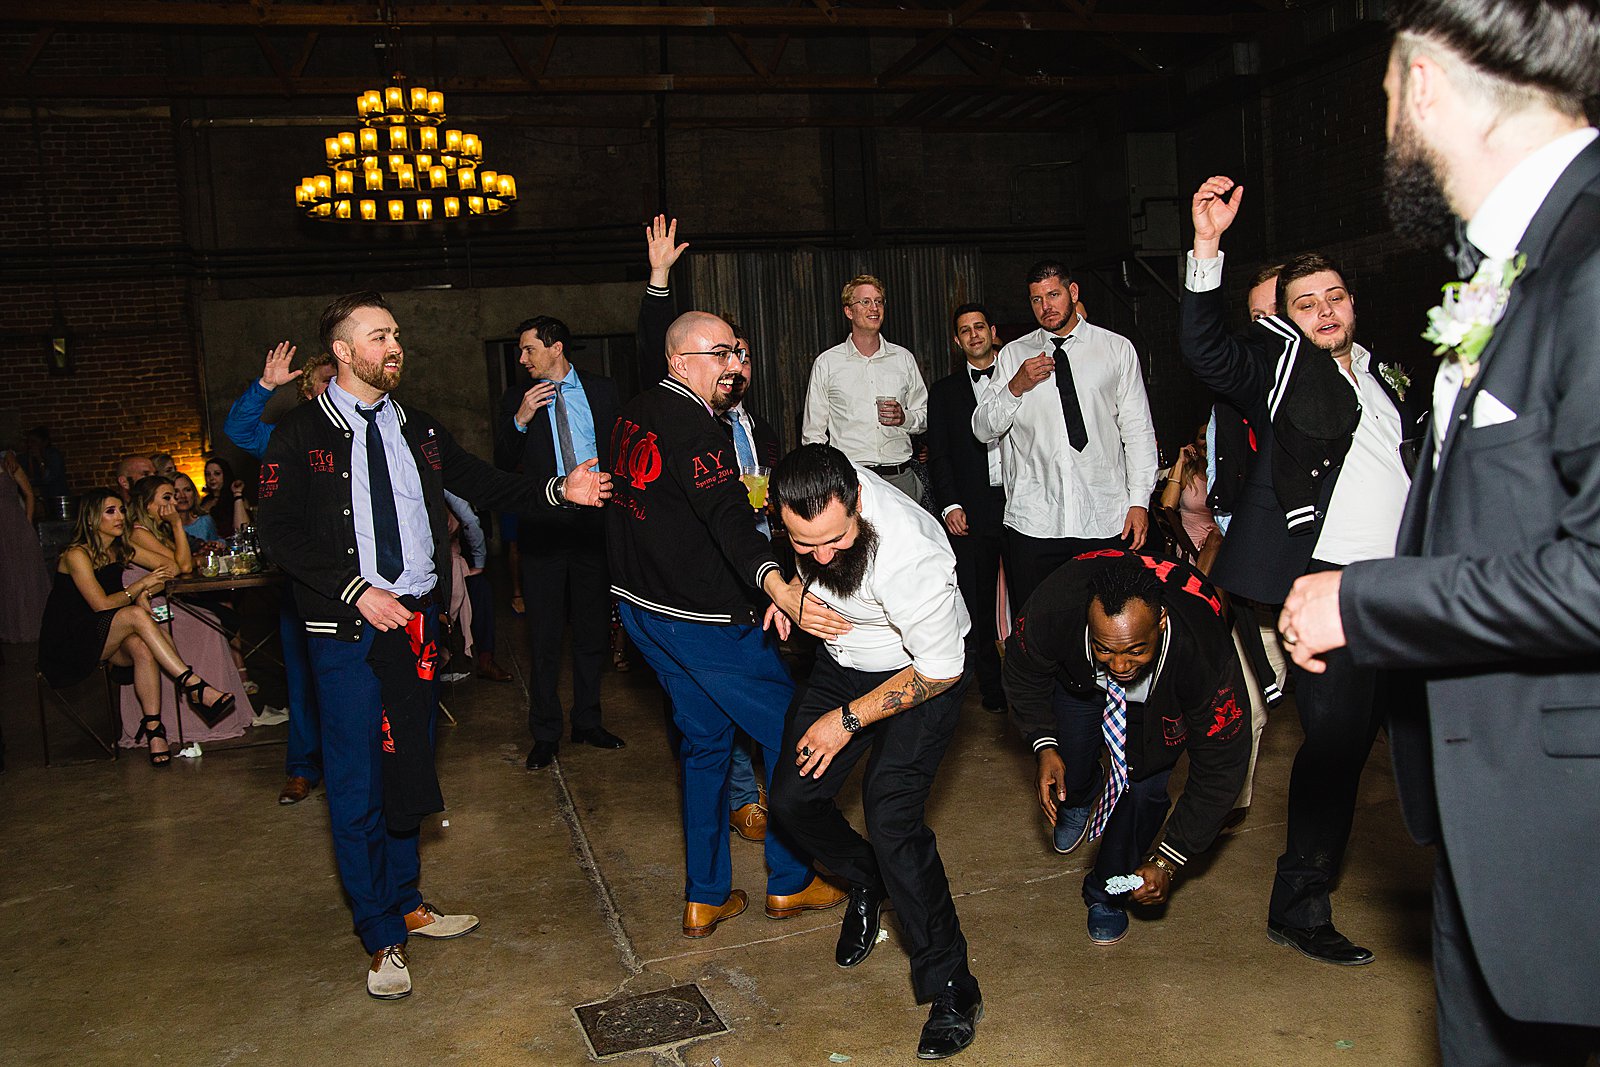 Garter toss at The Ice House wedding reception by Phoenix wedding photographer PMA Photography.